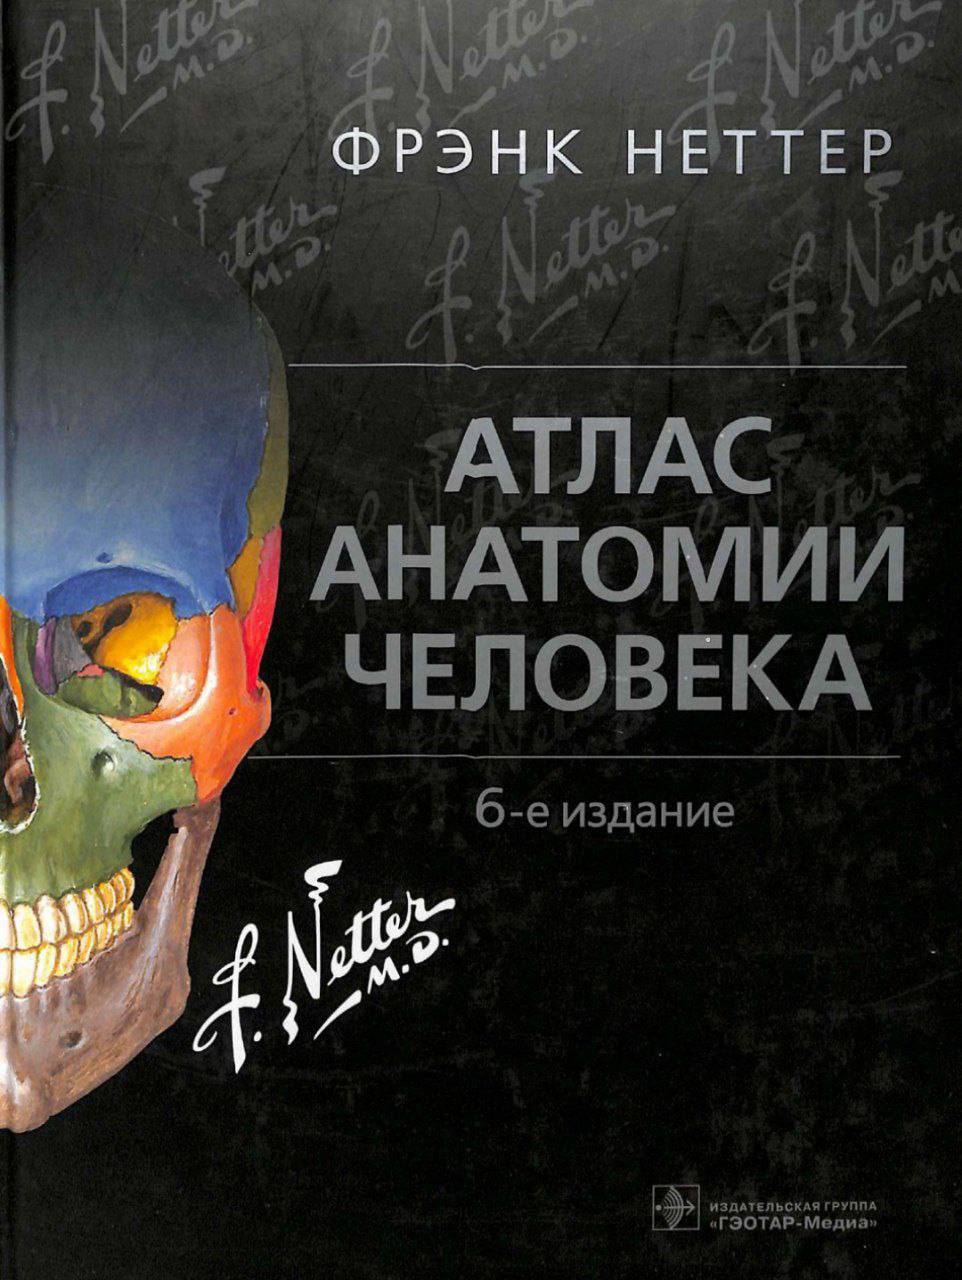 Атлас фрэнк. Atlas of Human Anatomy Frank h. Netter. Фрэнк Неттер анатомия 6 издание. Atlas of Human Anatomy (Frank h. Netter) 6th Edition. Фрэнк Неттер анатомия.